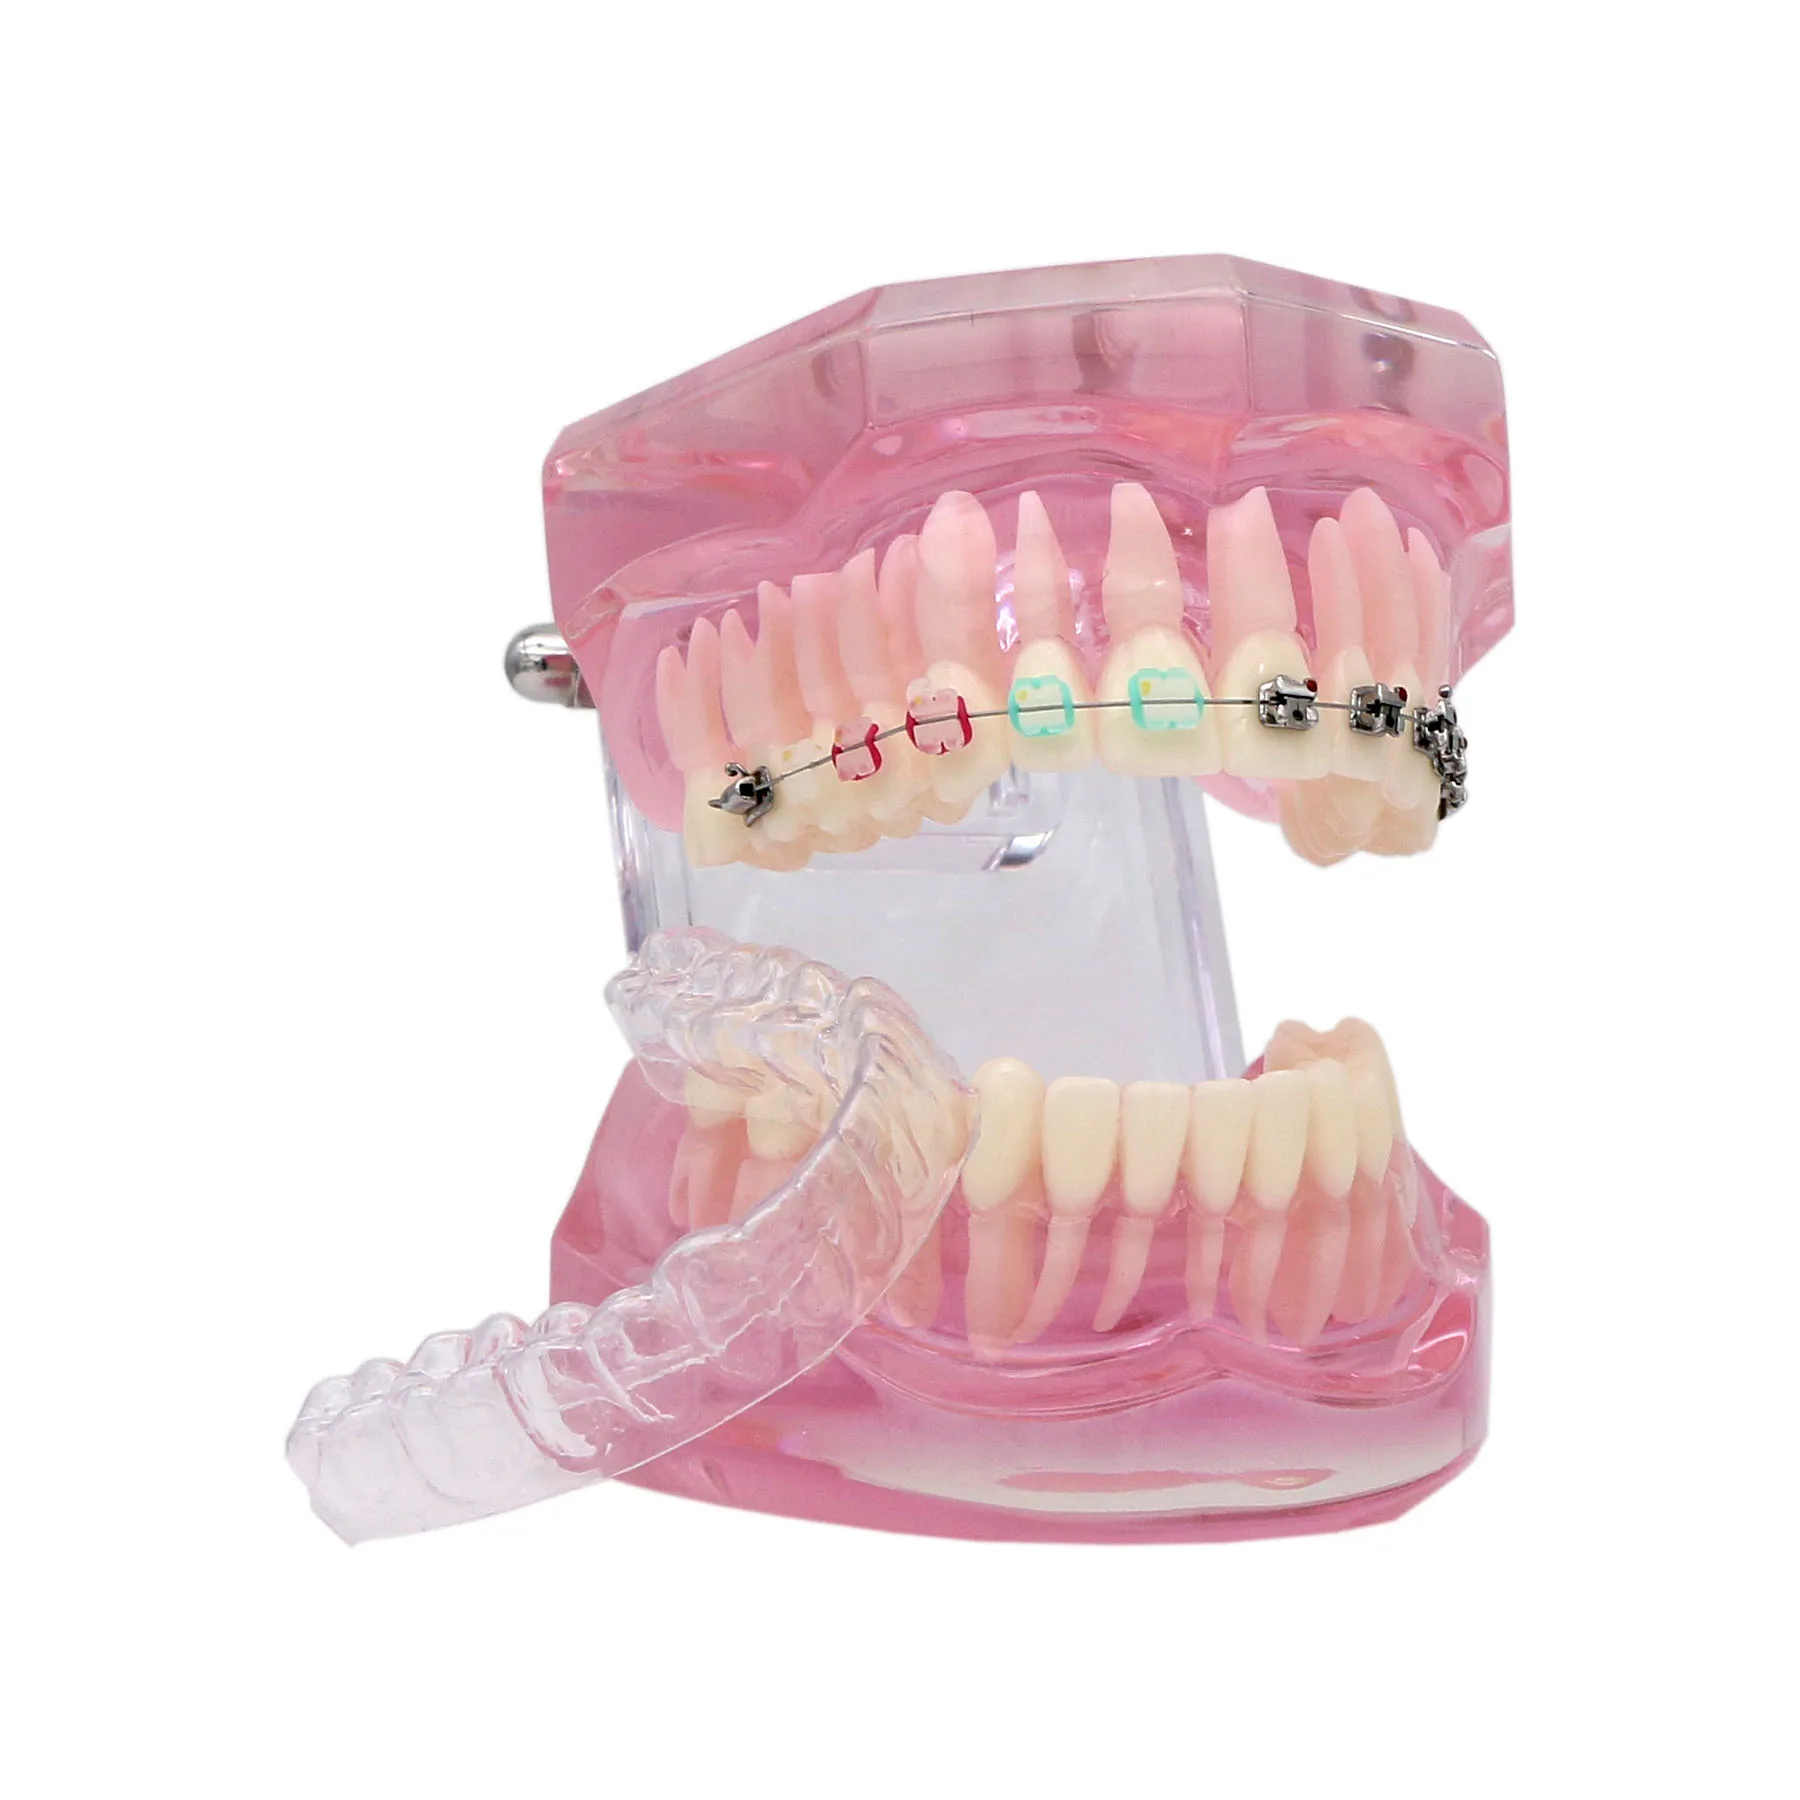 Dental Orthodontic Teeth Model Metal Ceramic Self-ligating Bracket Buccal Tube #3012